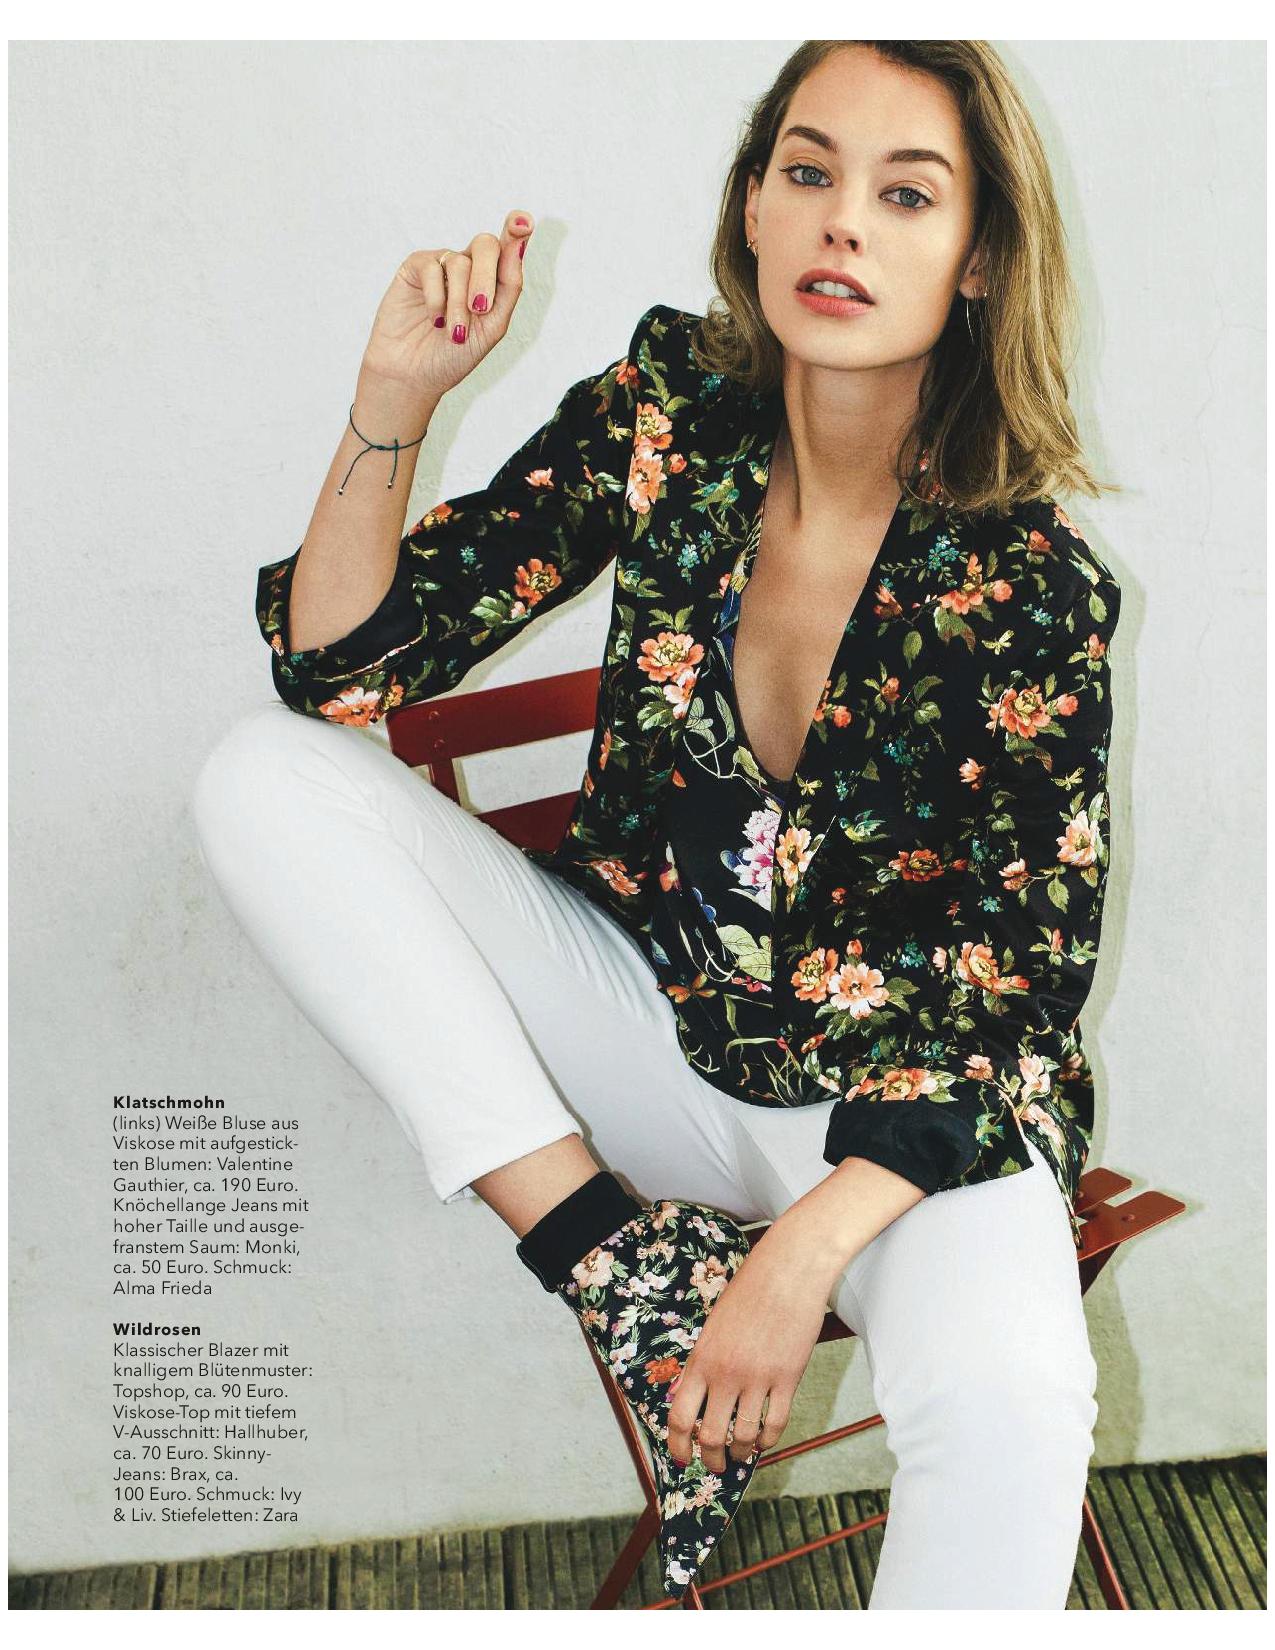 Elise van't Zand - Page 3 - Female Fashion Models - Bellazon